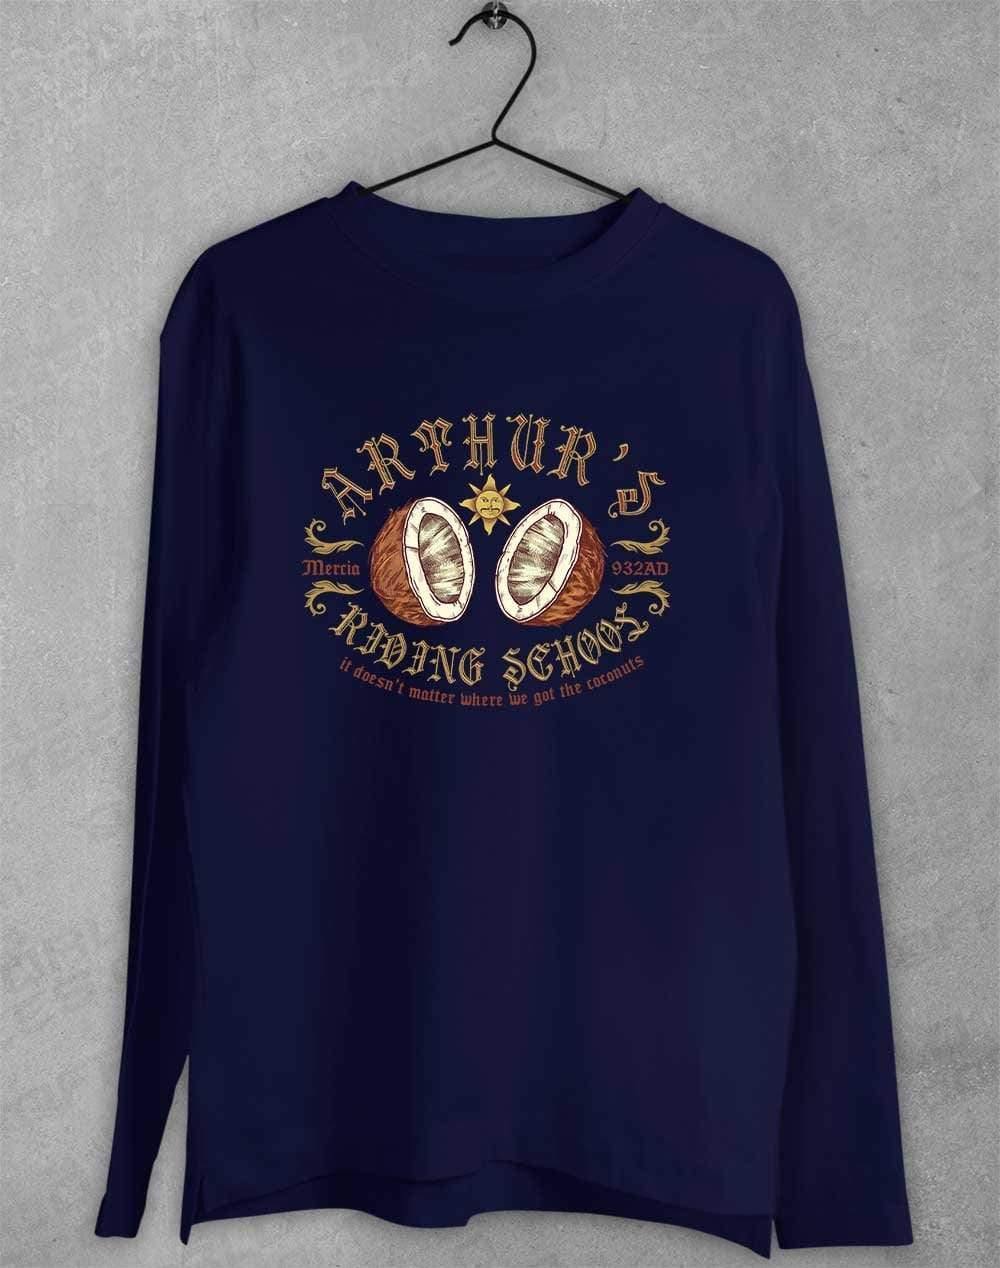 King Arthur's Riding School Long Sleeve T-Shirt S / Navy  - Off World Tees